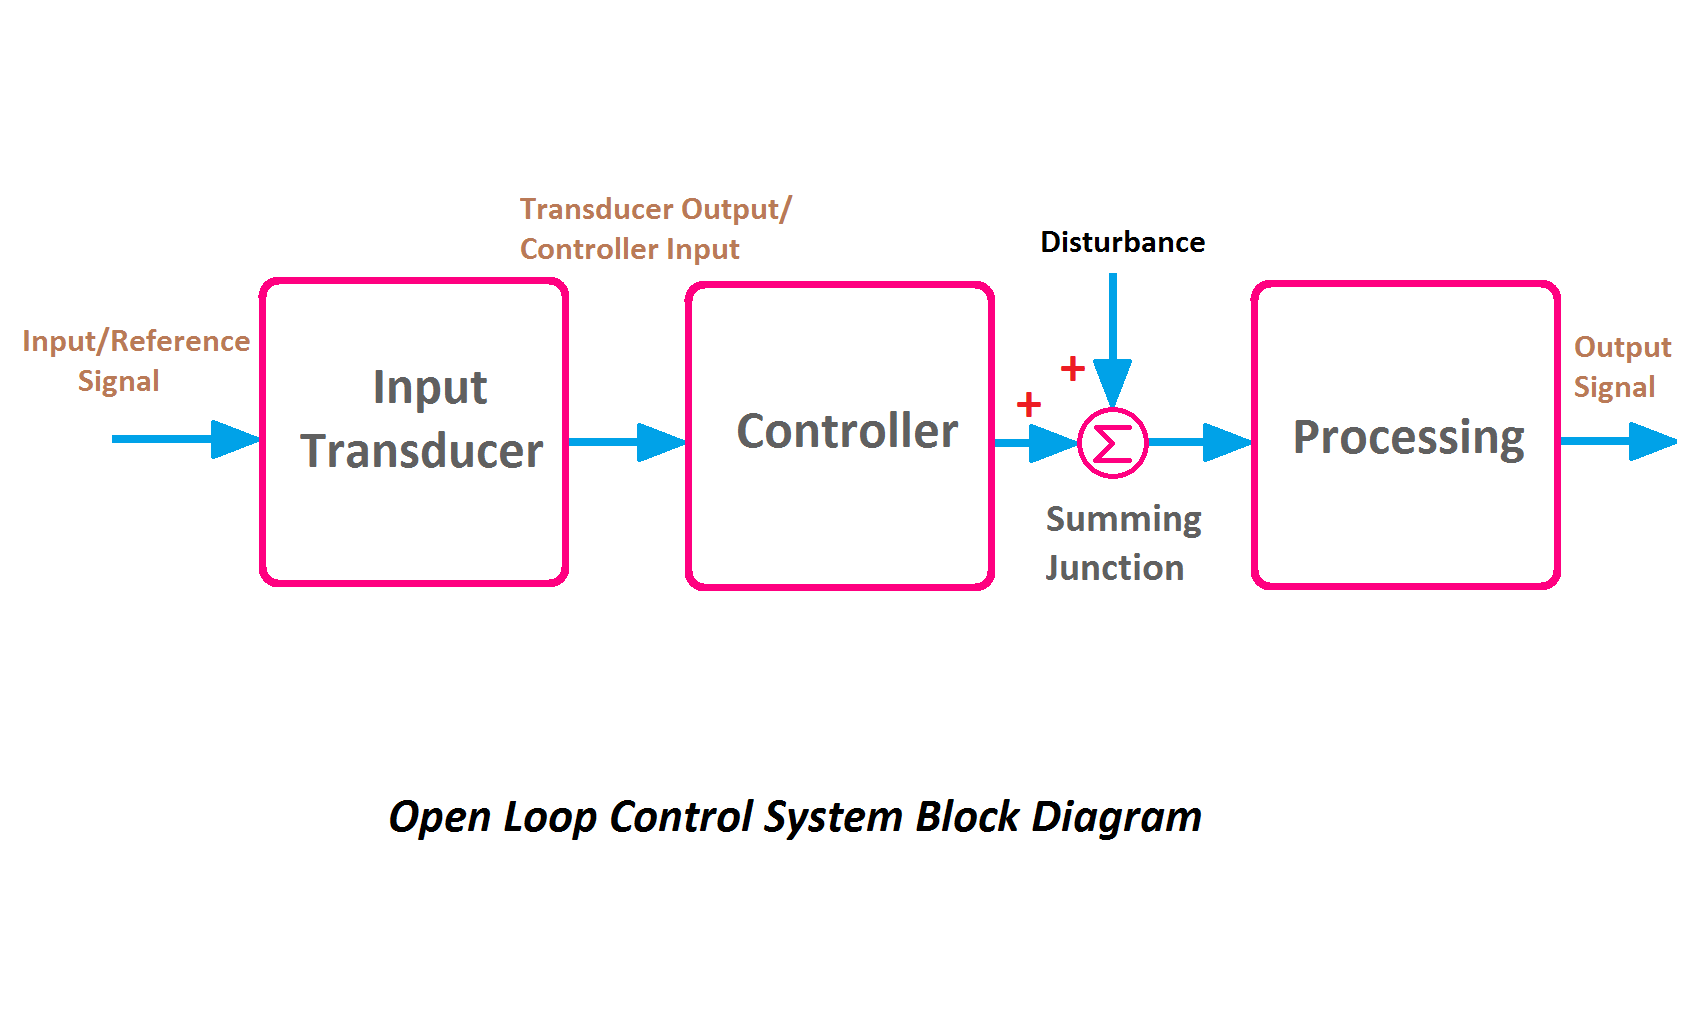 Open Loop Control System Block Diagram, block diagram of Open Loop Control System